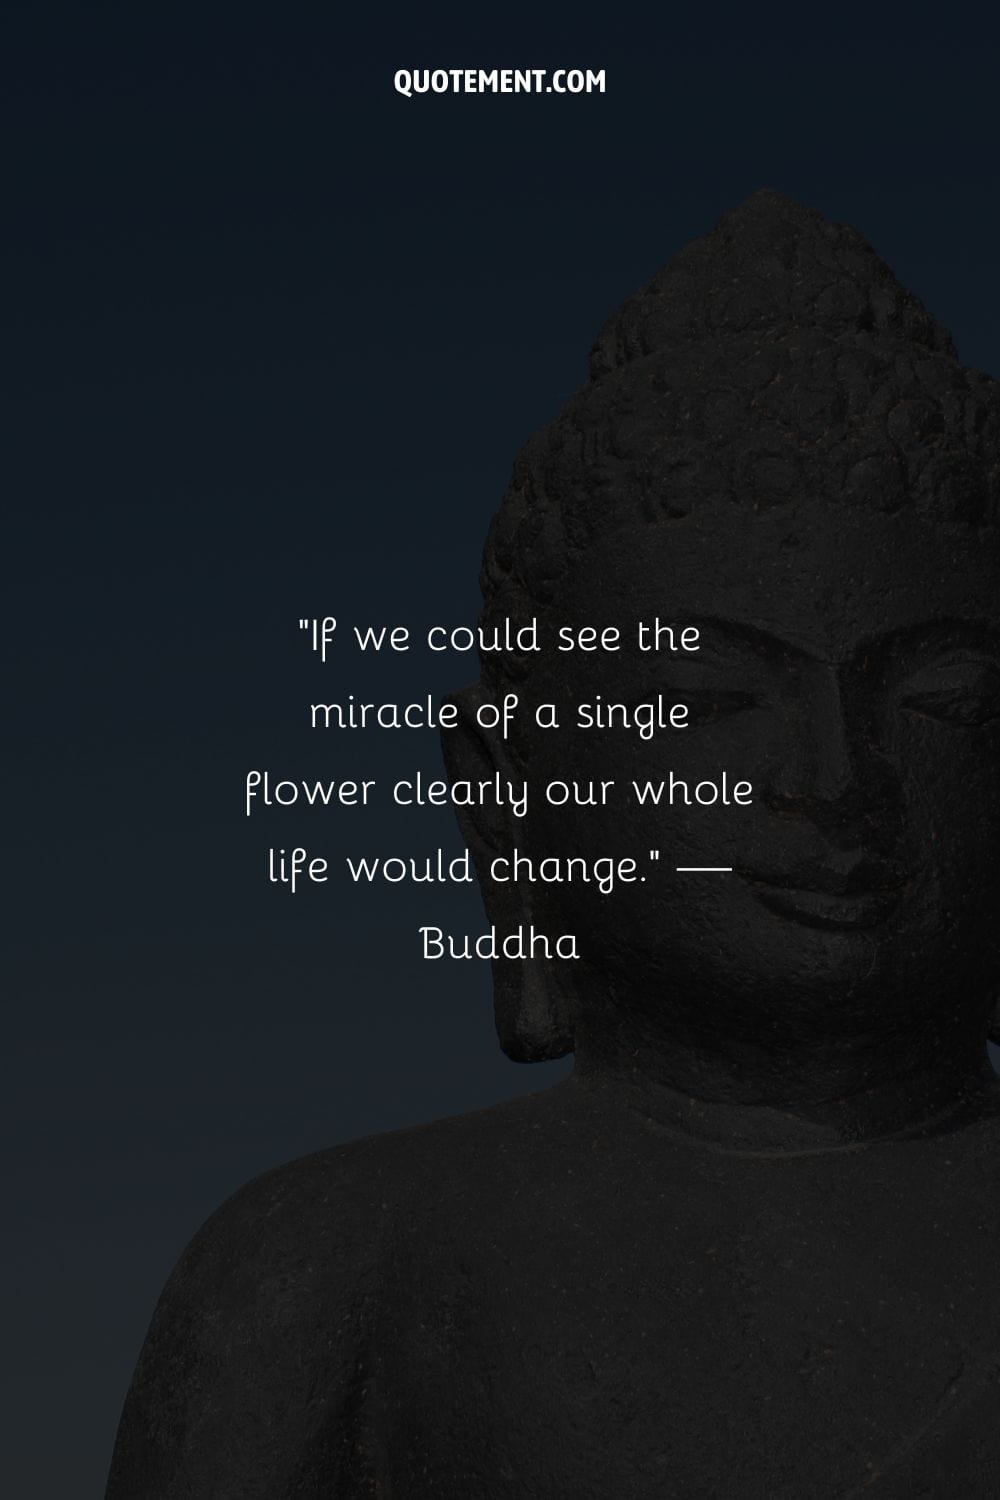 Close-up contemplative presence in Buddha's expression.